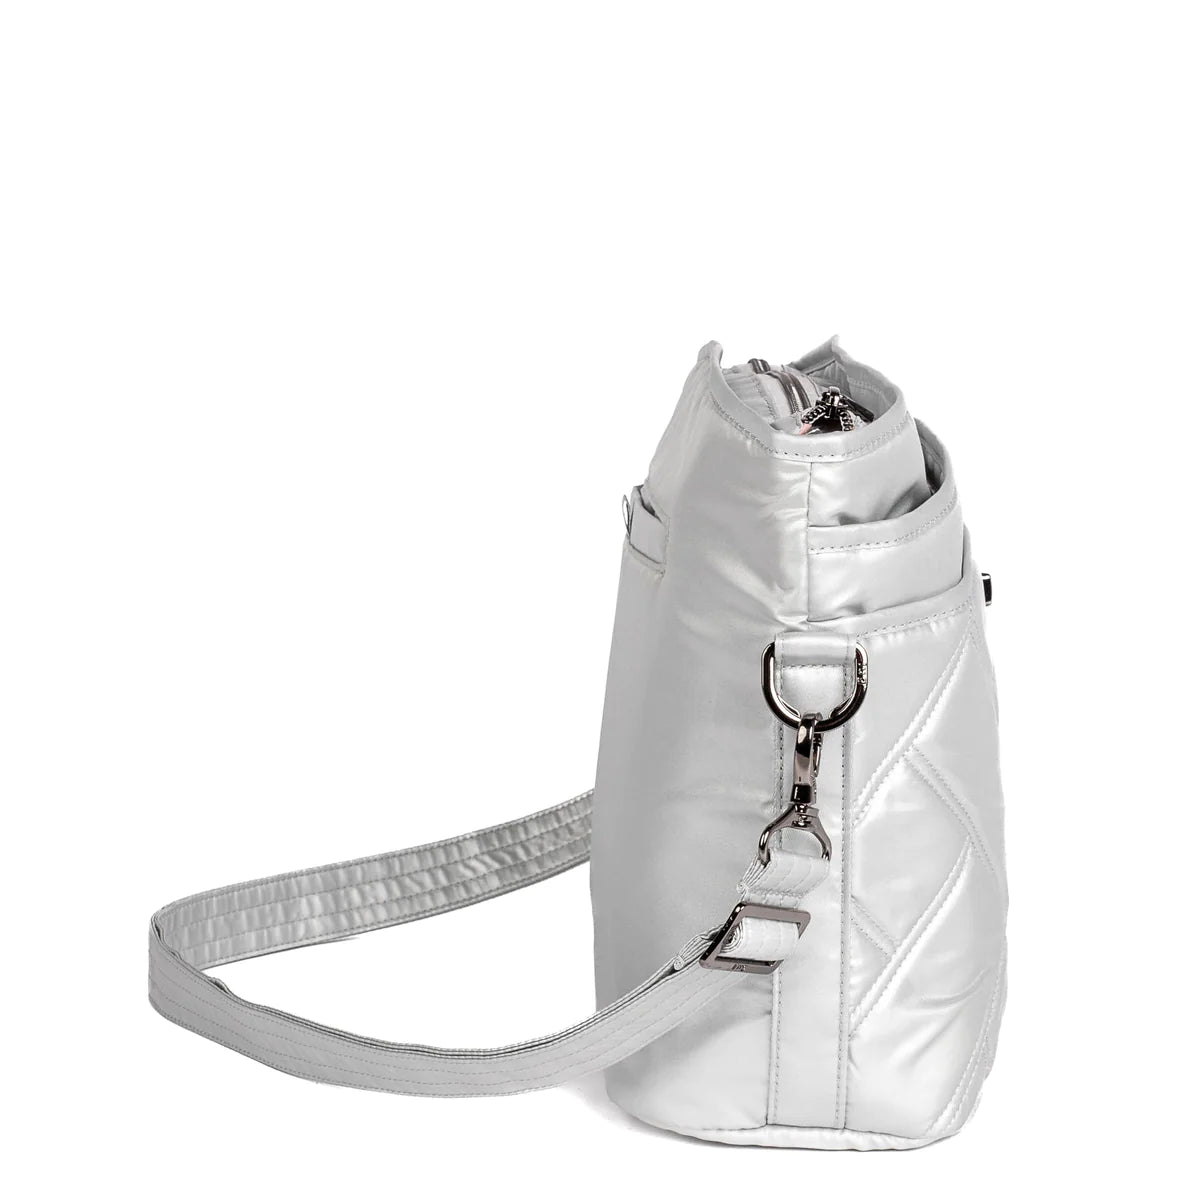 LUG Adagio Shoulder Bag in Metallic Silver